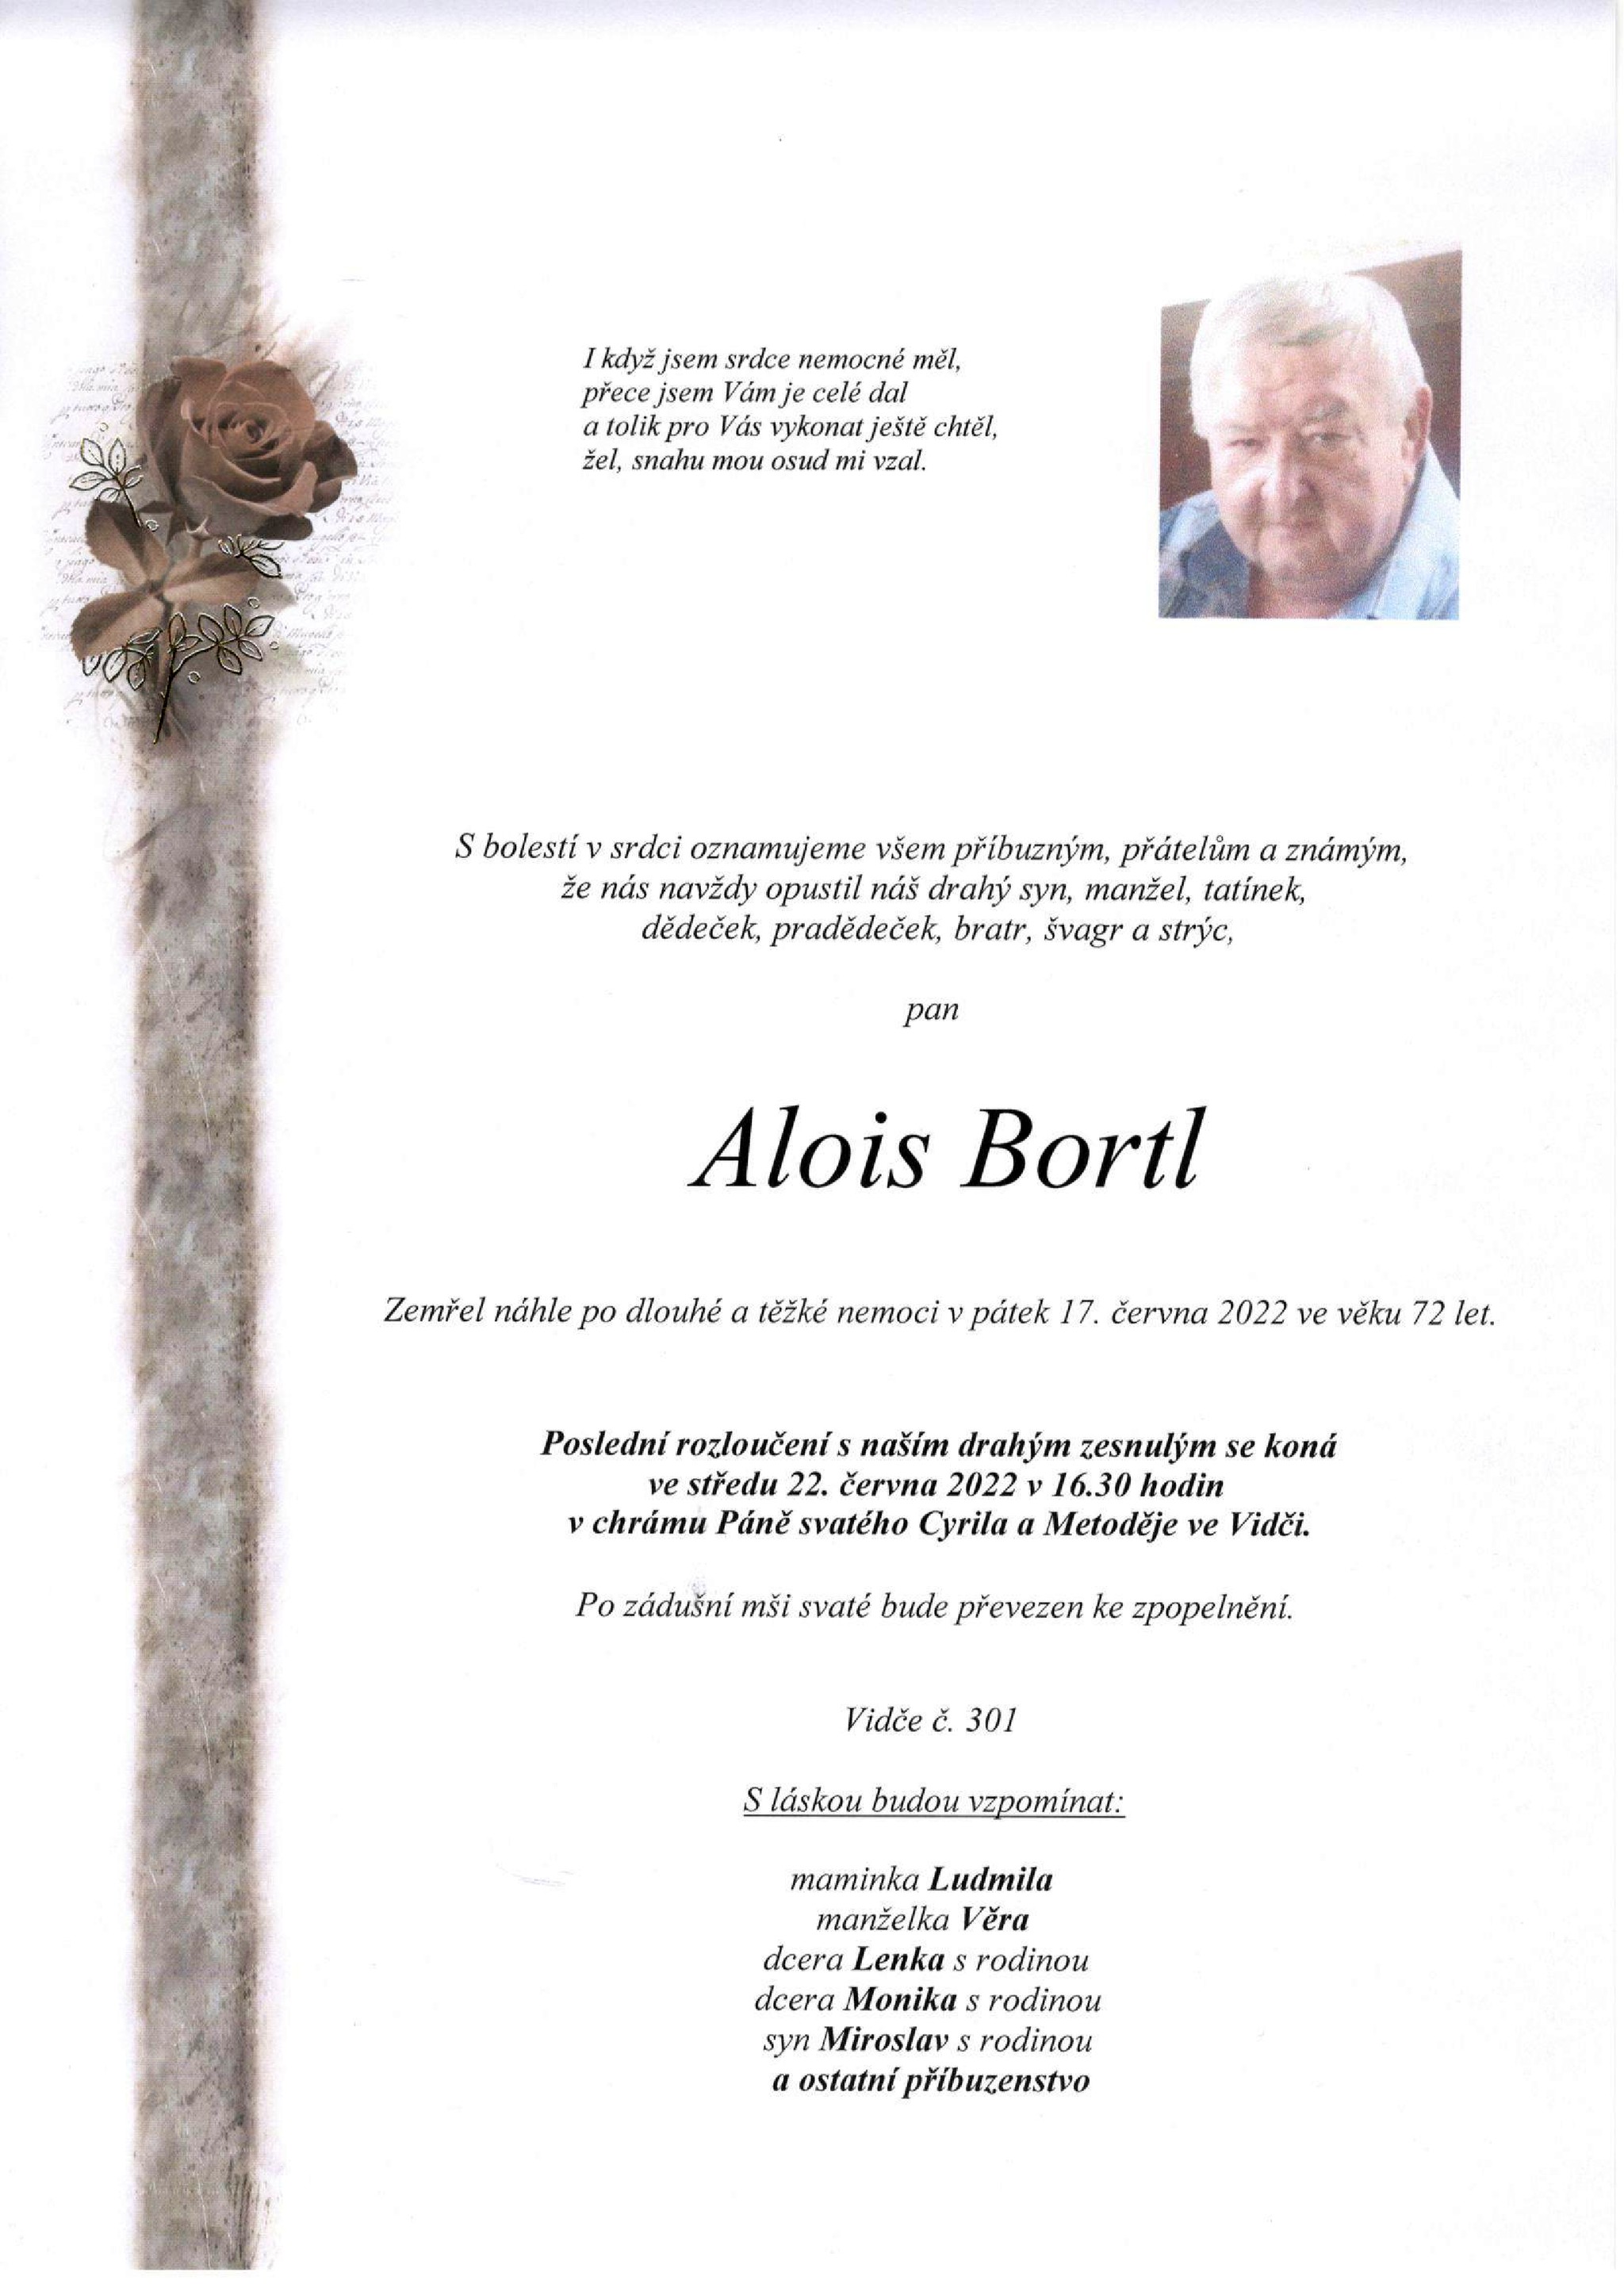 Alois Bortl